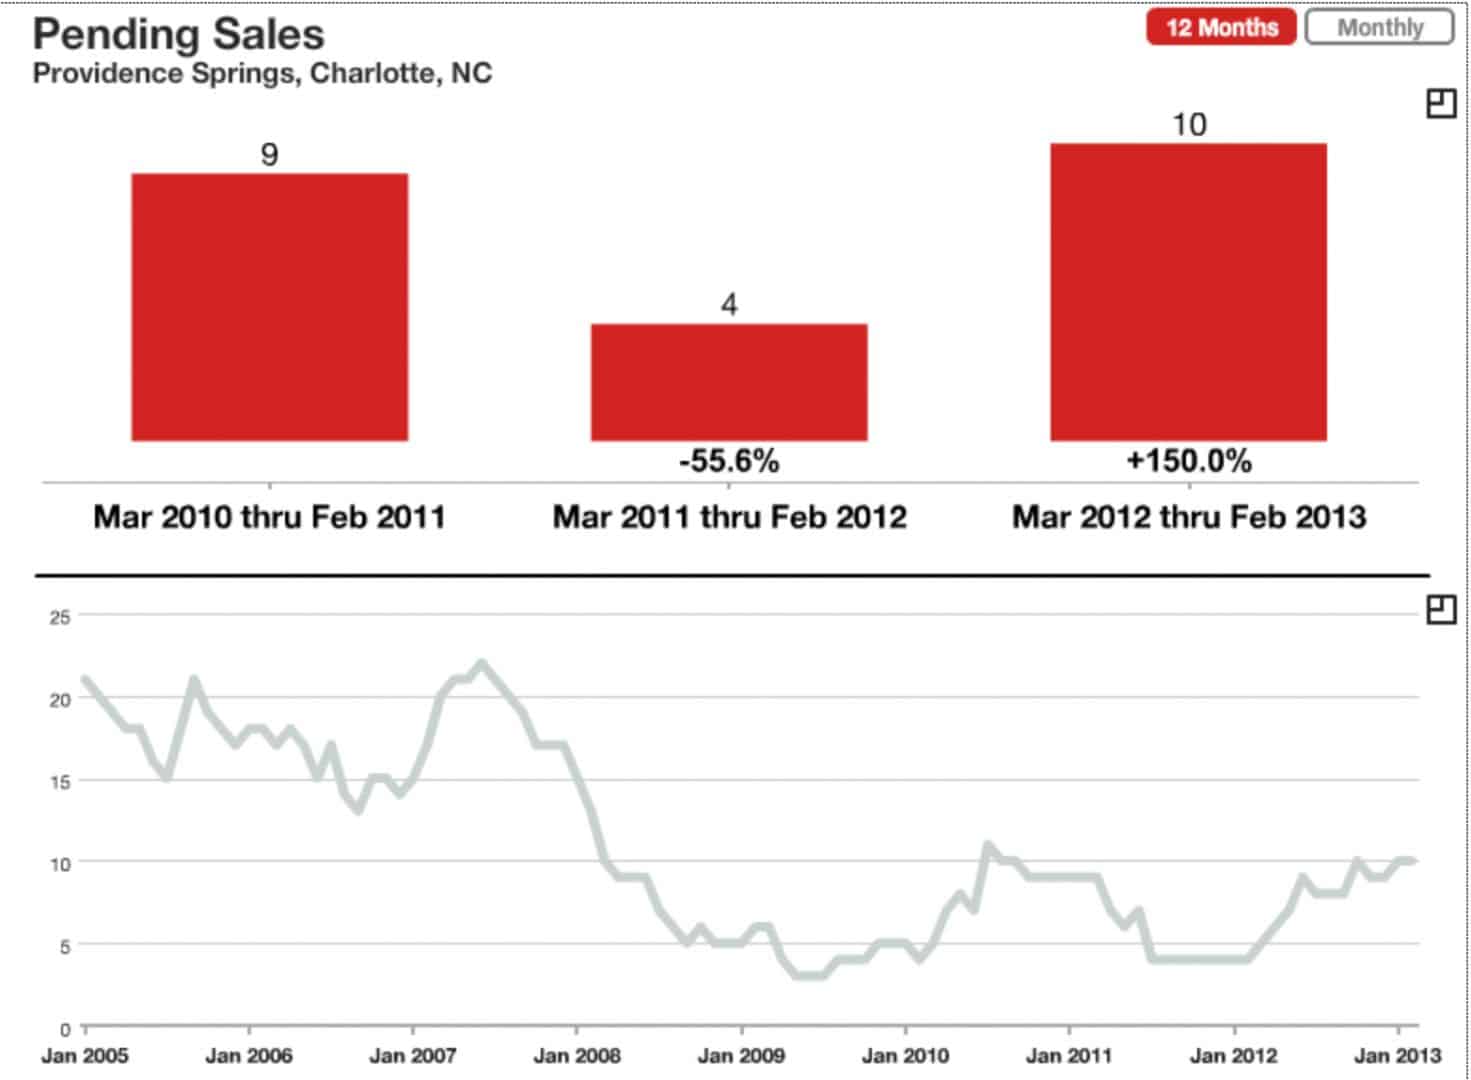 Providence Springs Pending Sales 03:2013